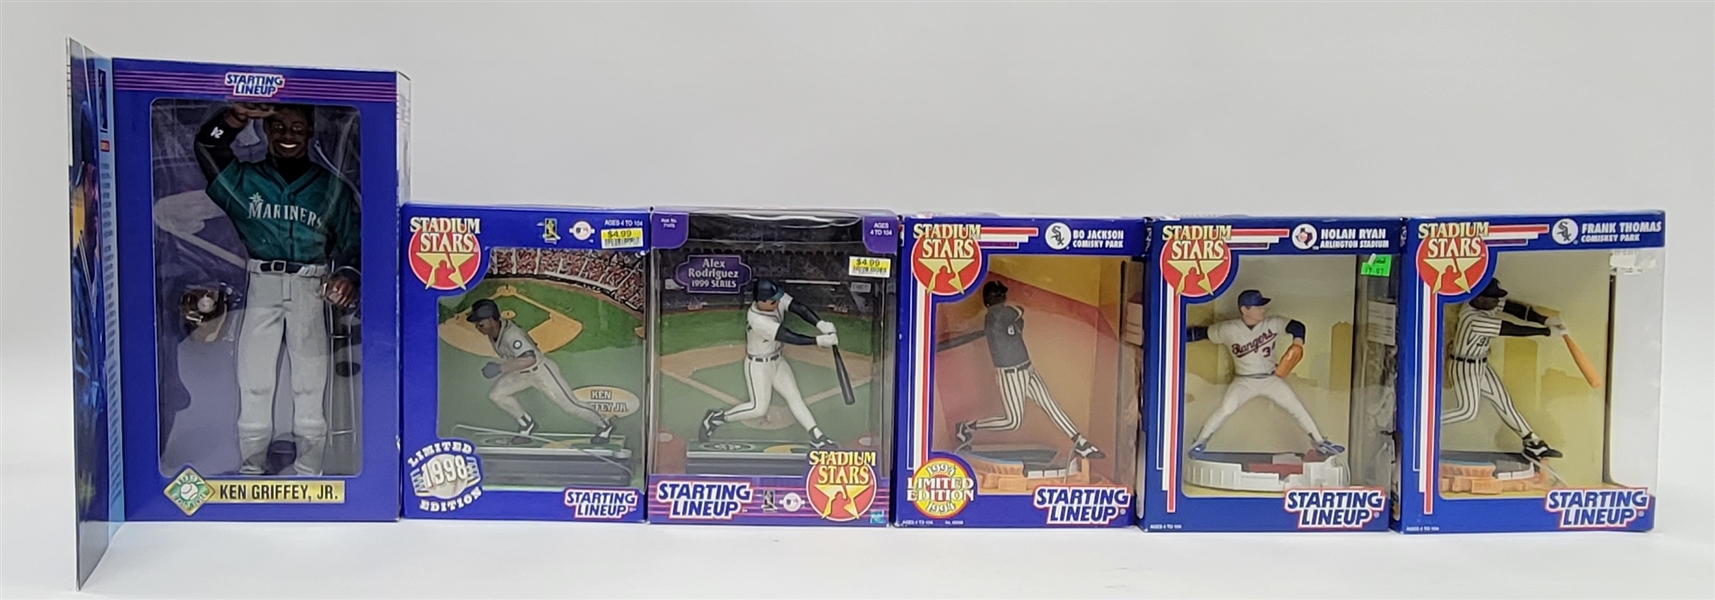 Lot of 5 MLB Stadium Stars Starting Lineup Figures & Griffey Jr. Deluxe Figure